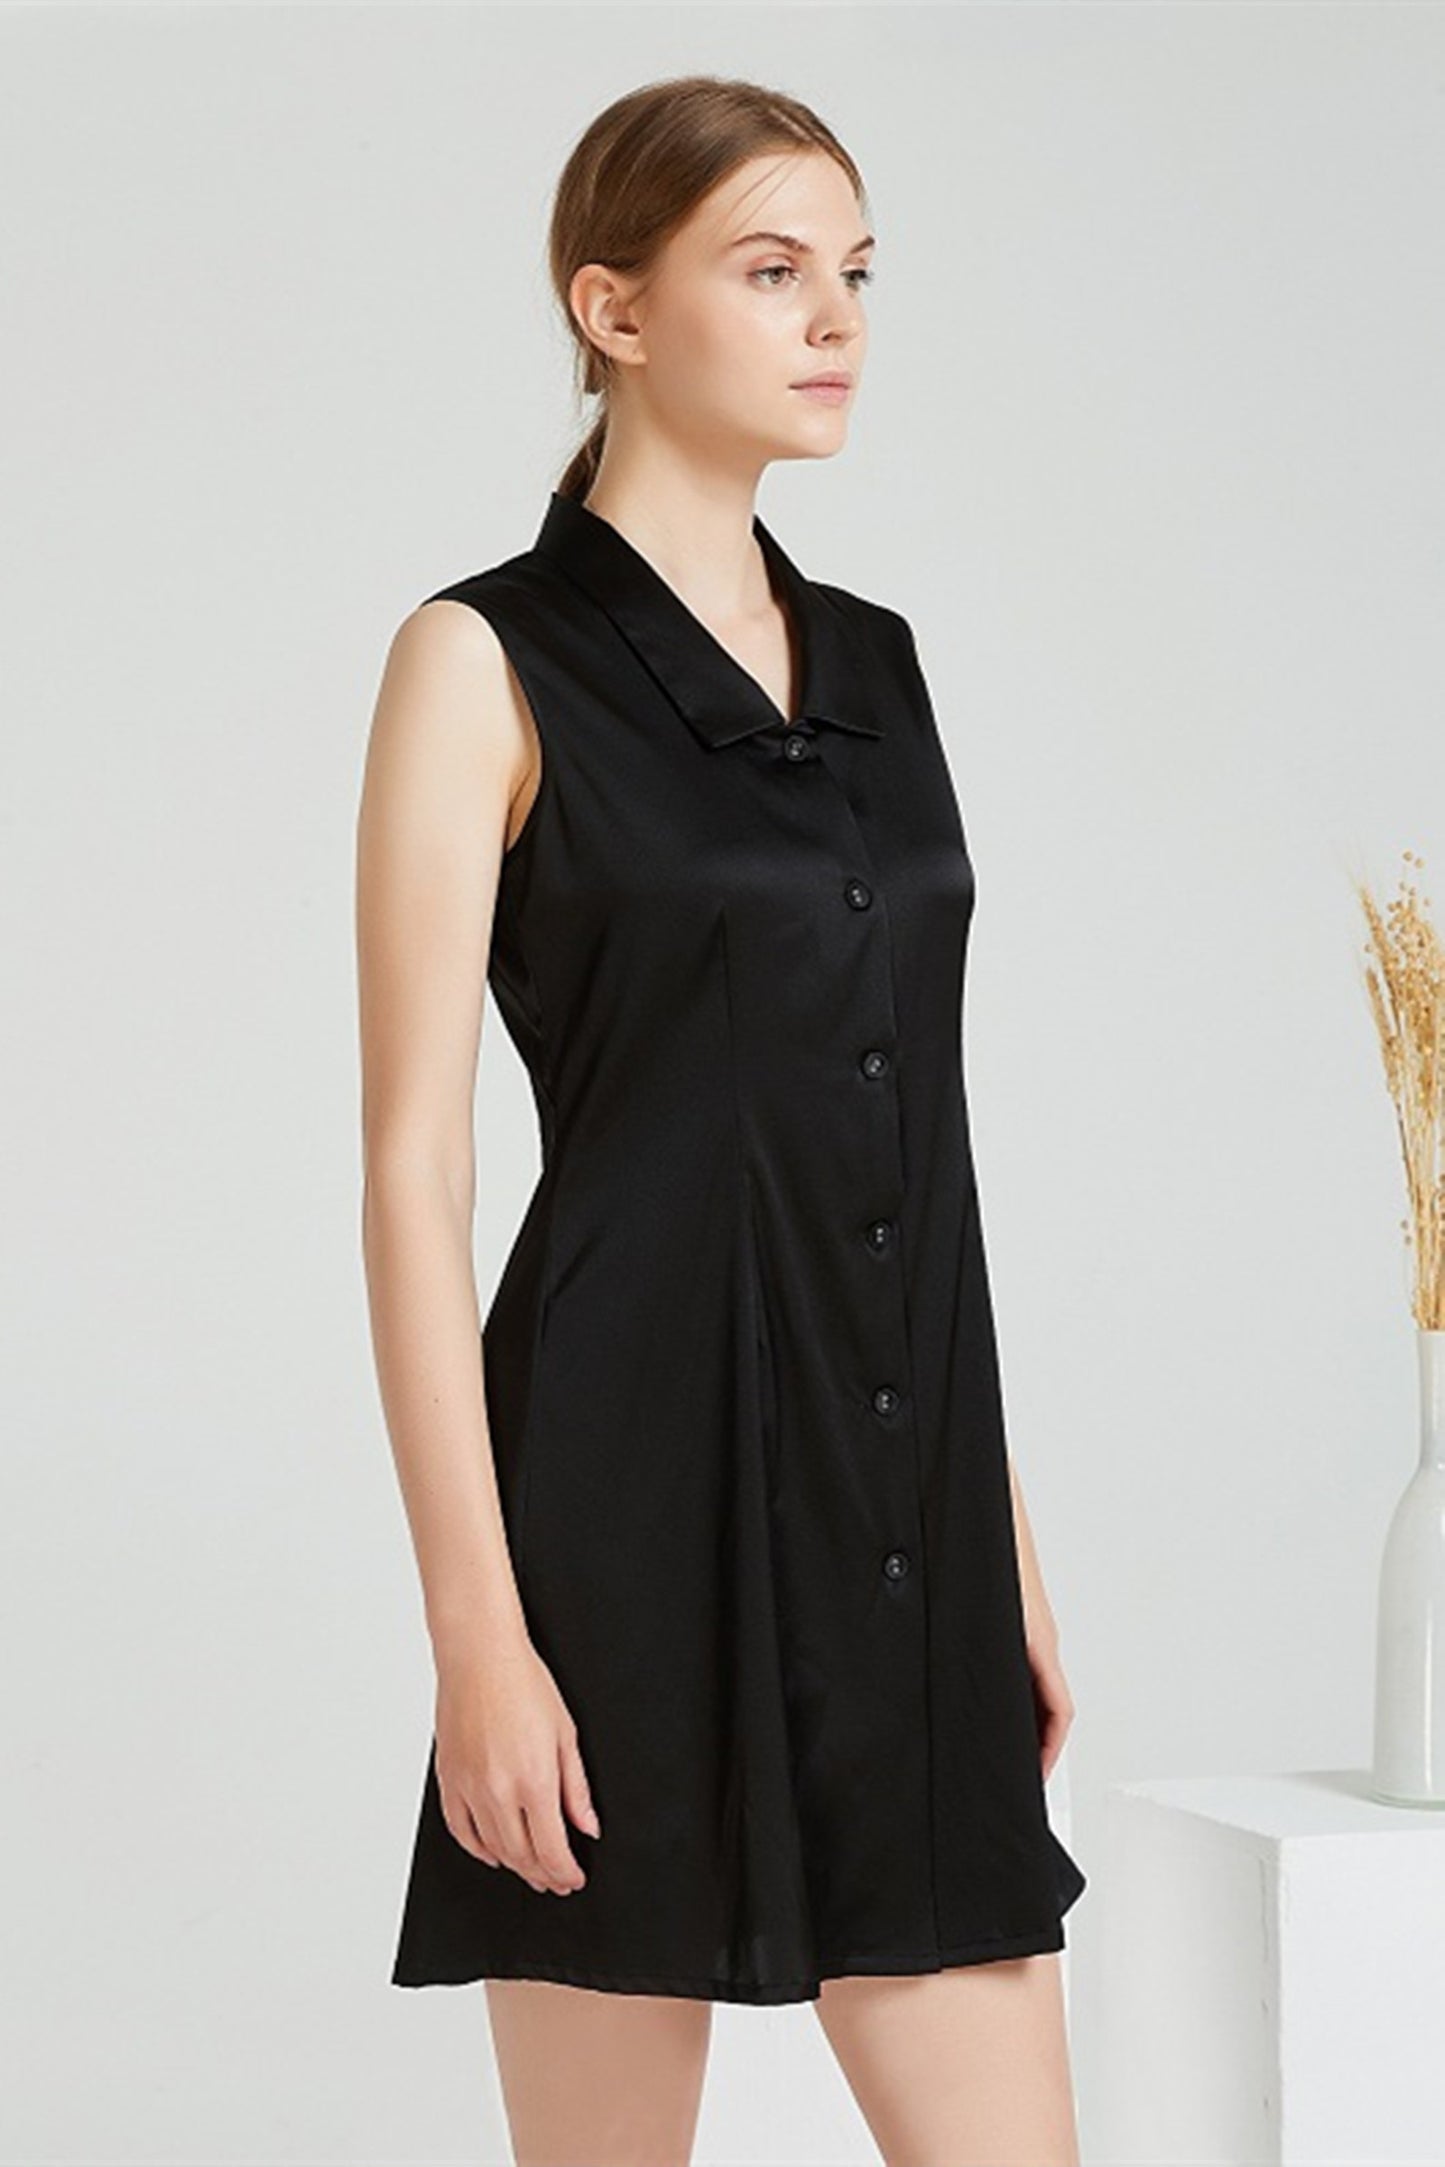 Sleeveless Classic Black Dress